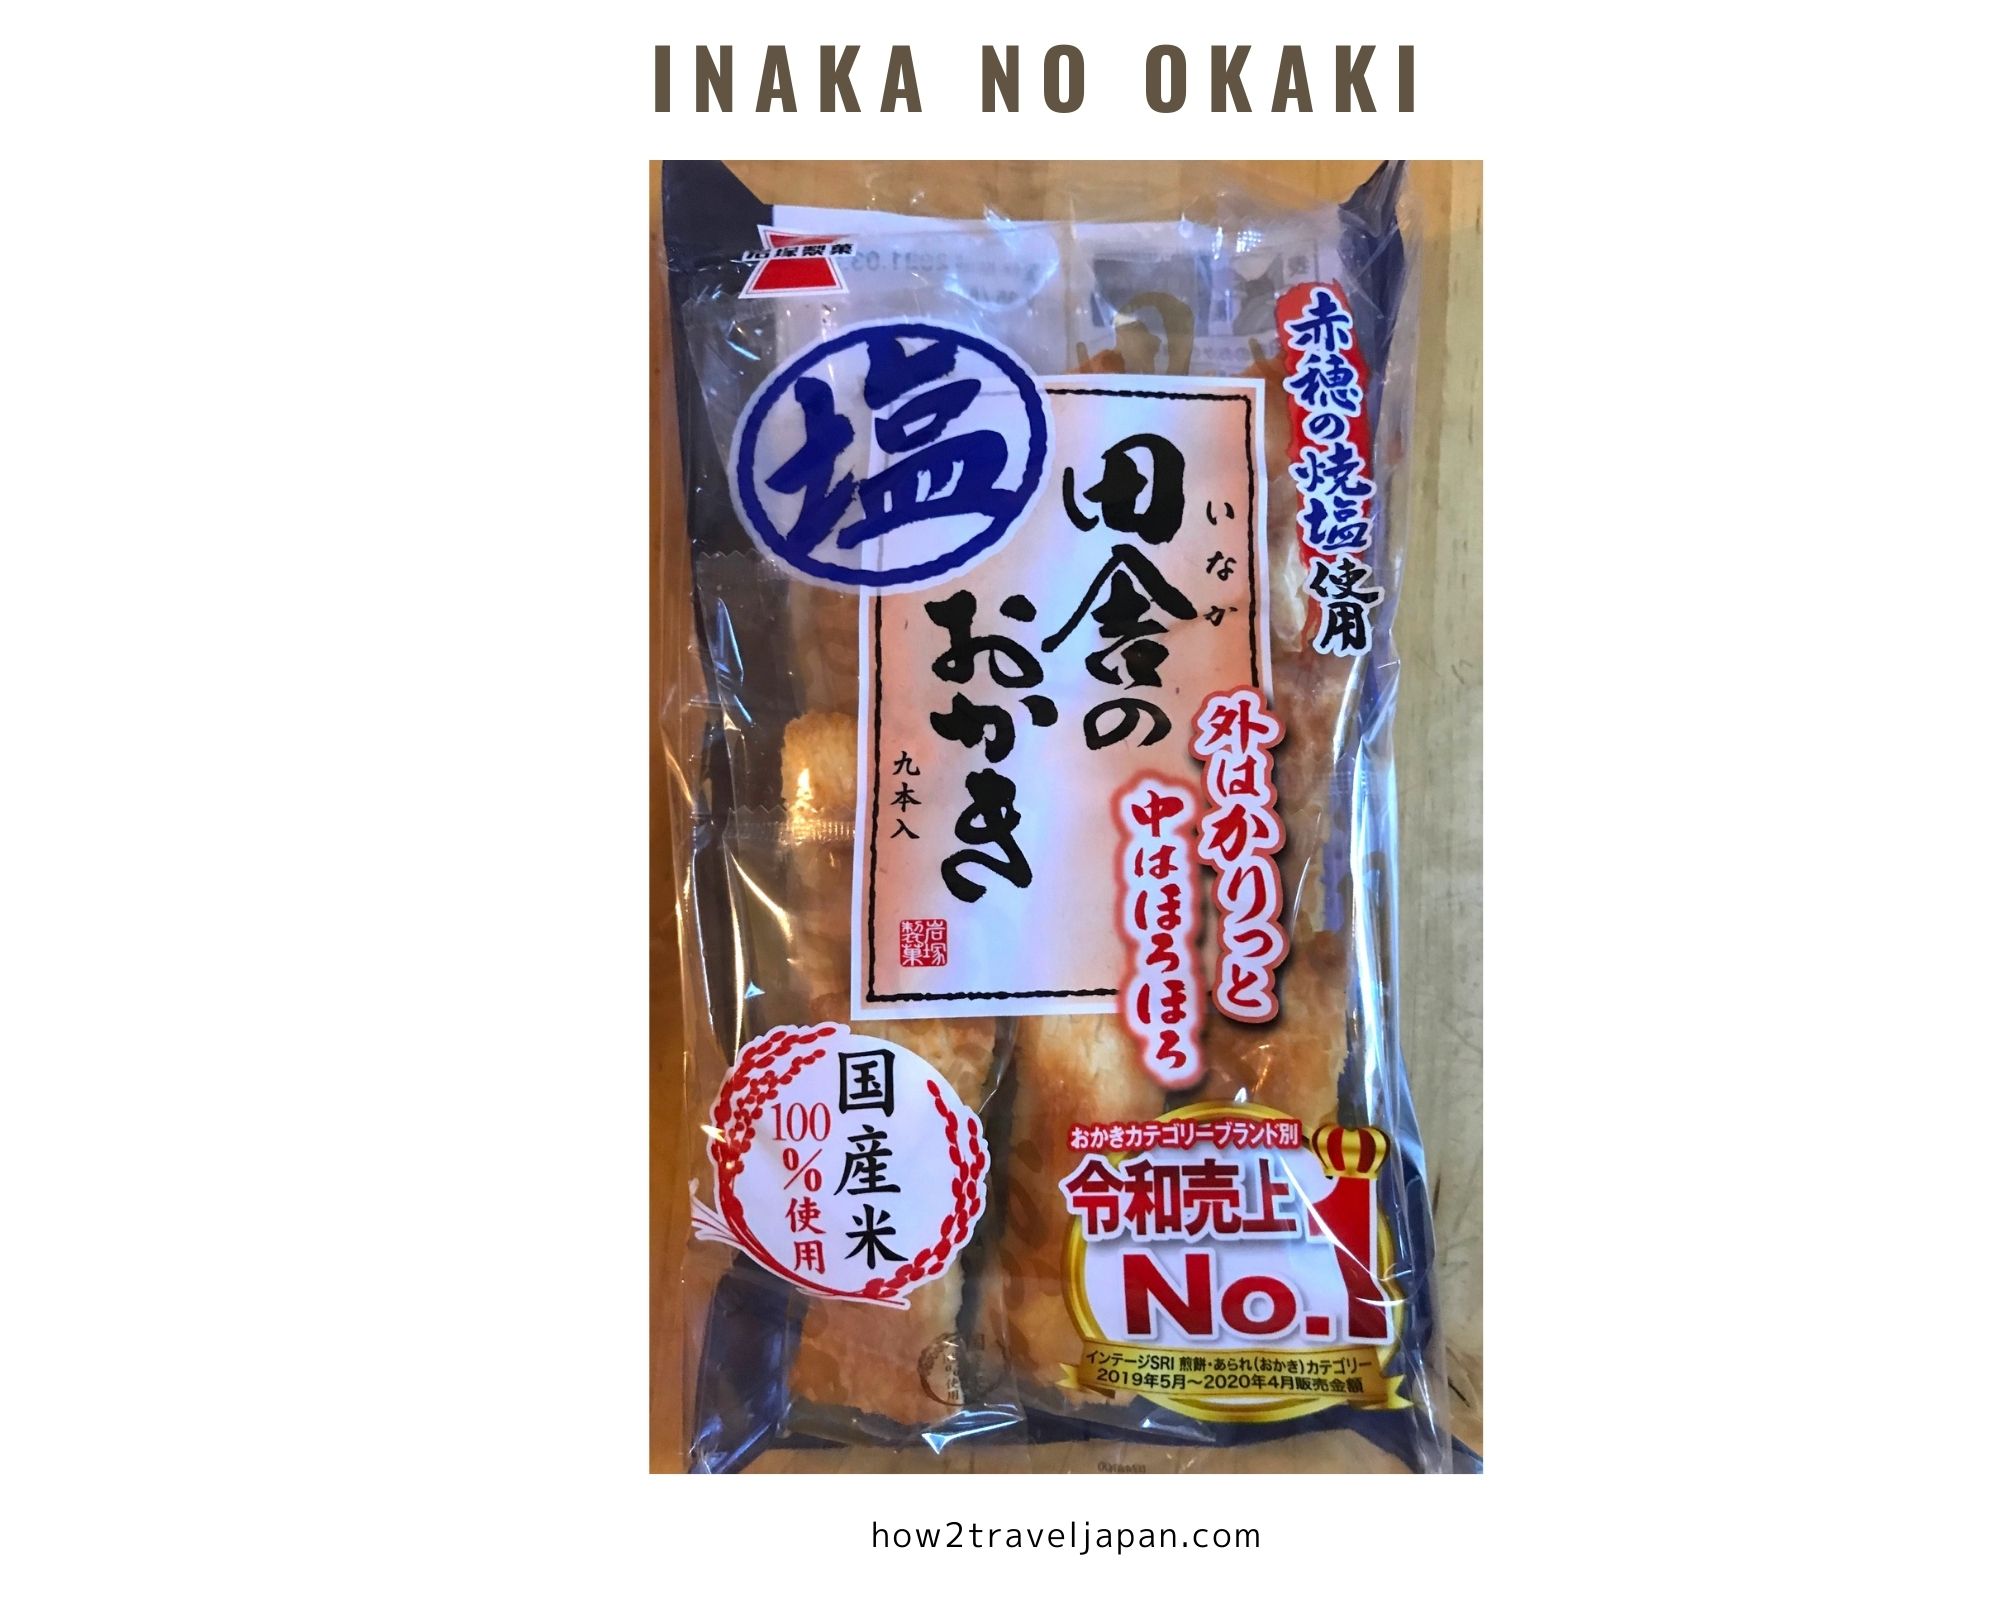 You are currently viewing Inaka no Okaki from Iwatsuka Seika